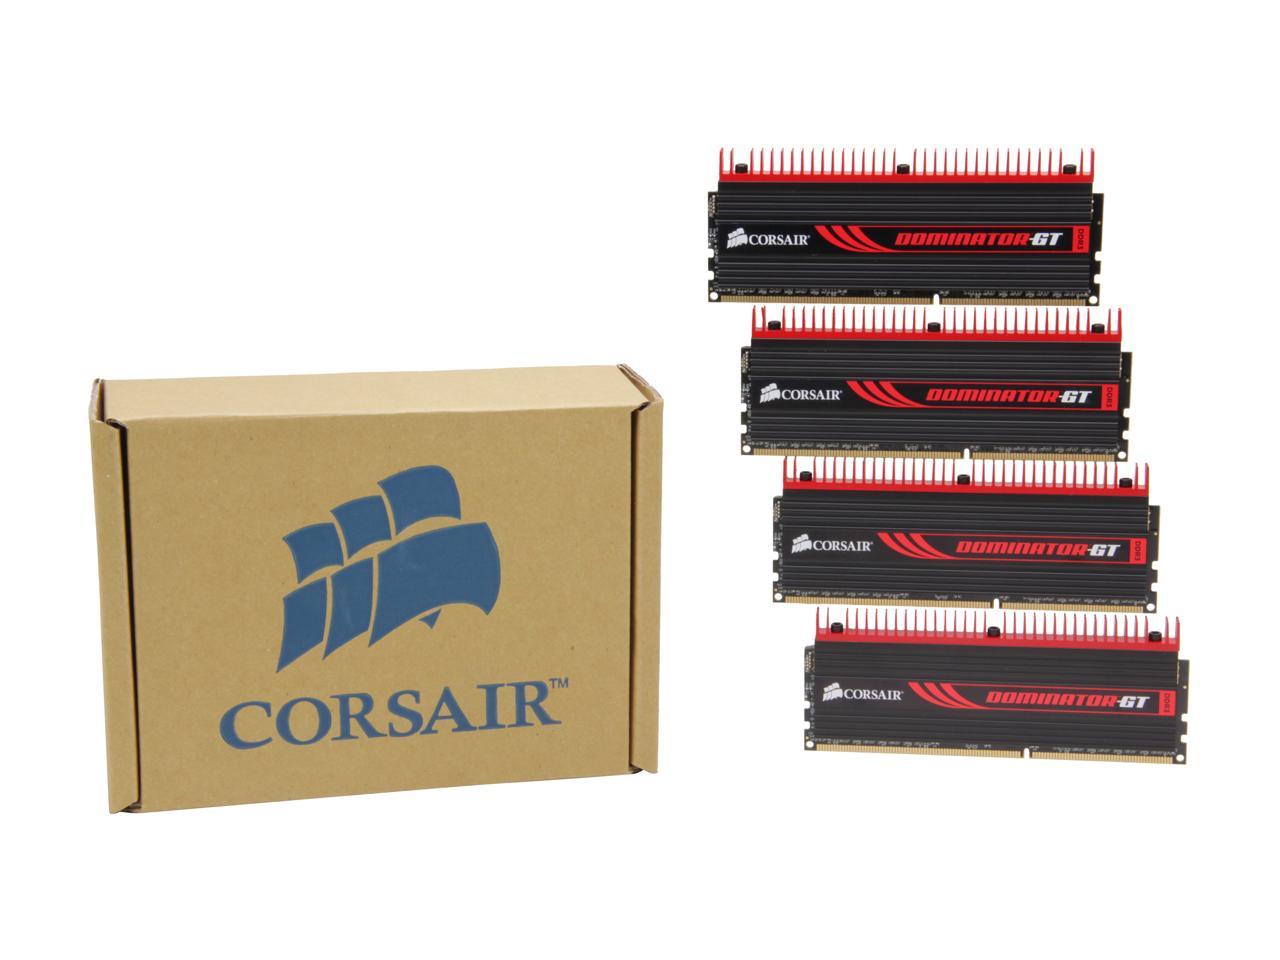 CORSAIR DOMINATOR GT 16GB (4 x 4GB) DDR3 2133 Desktop Memory Model 